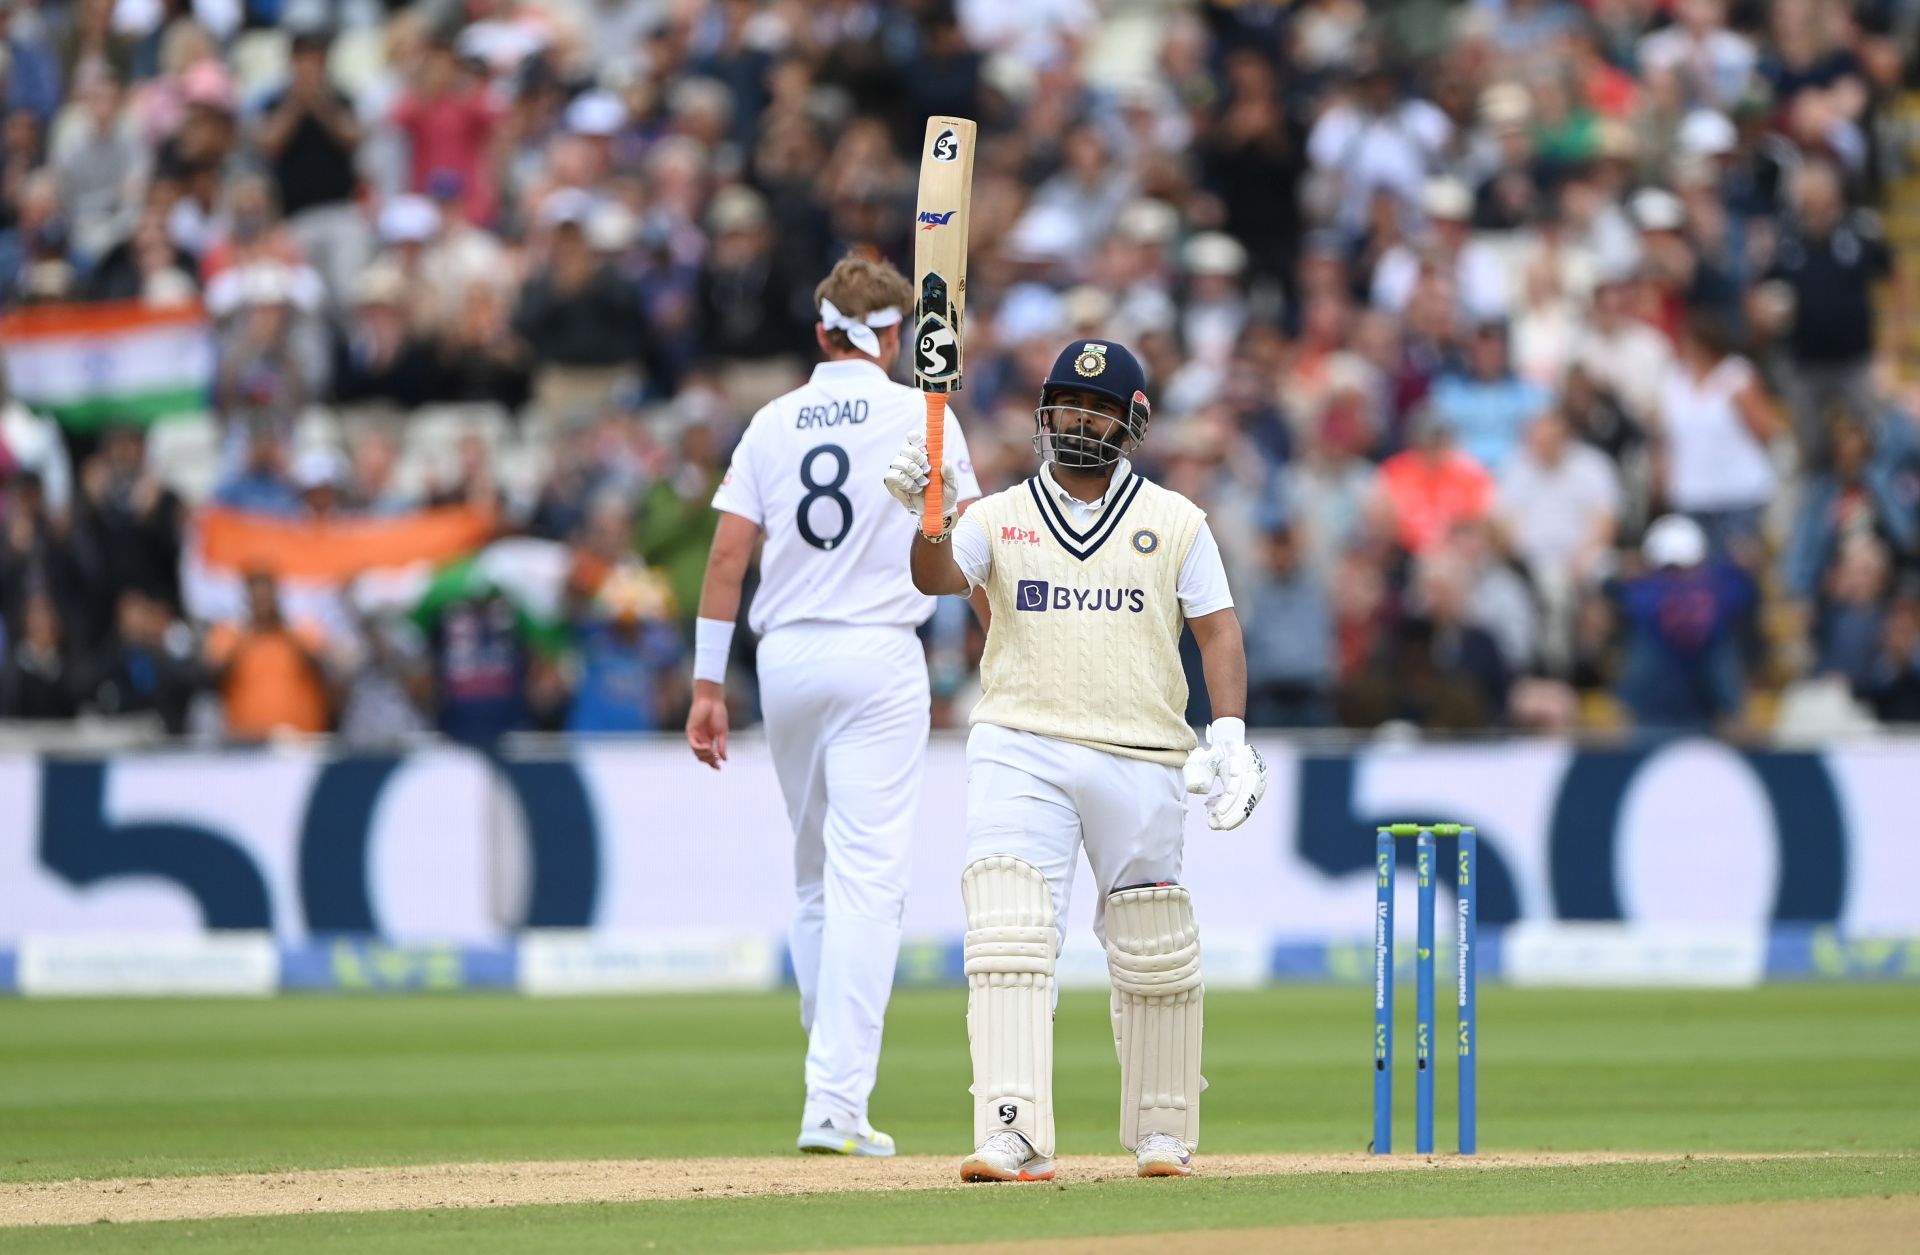 Rishabh Pant scored 203 runs across his two innings at Edgbaston